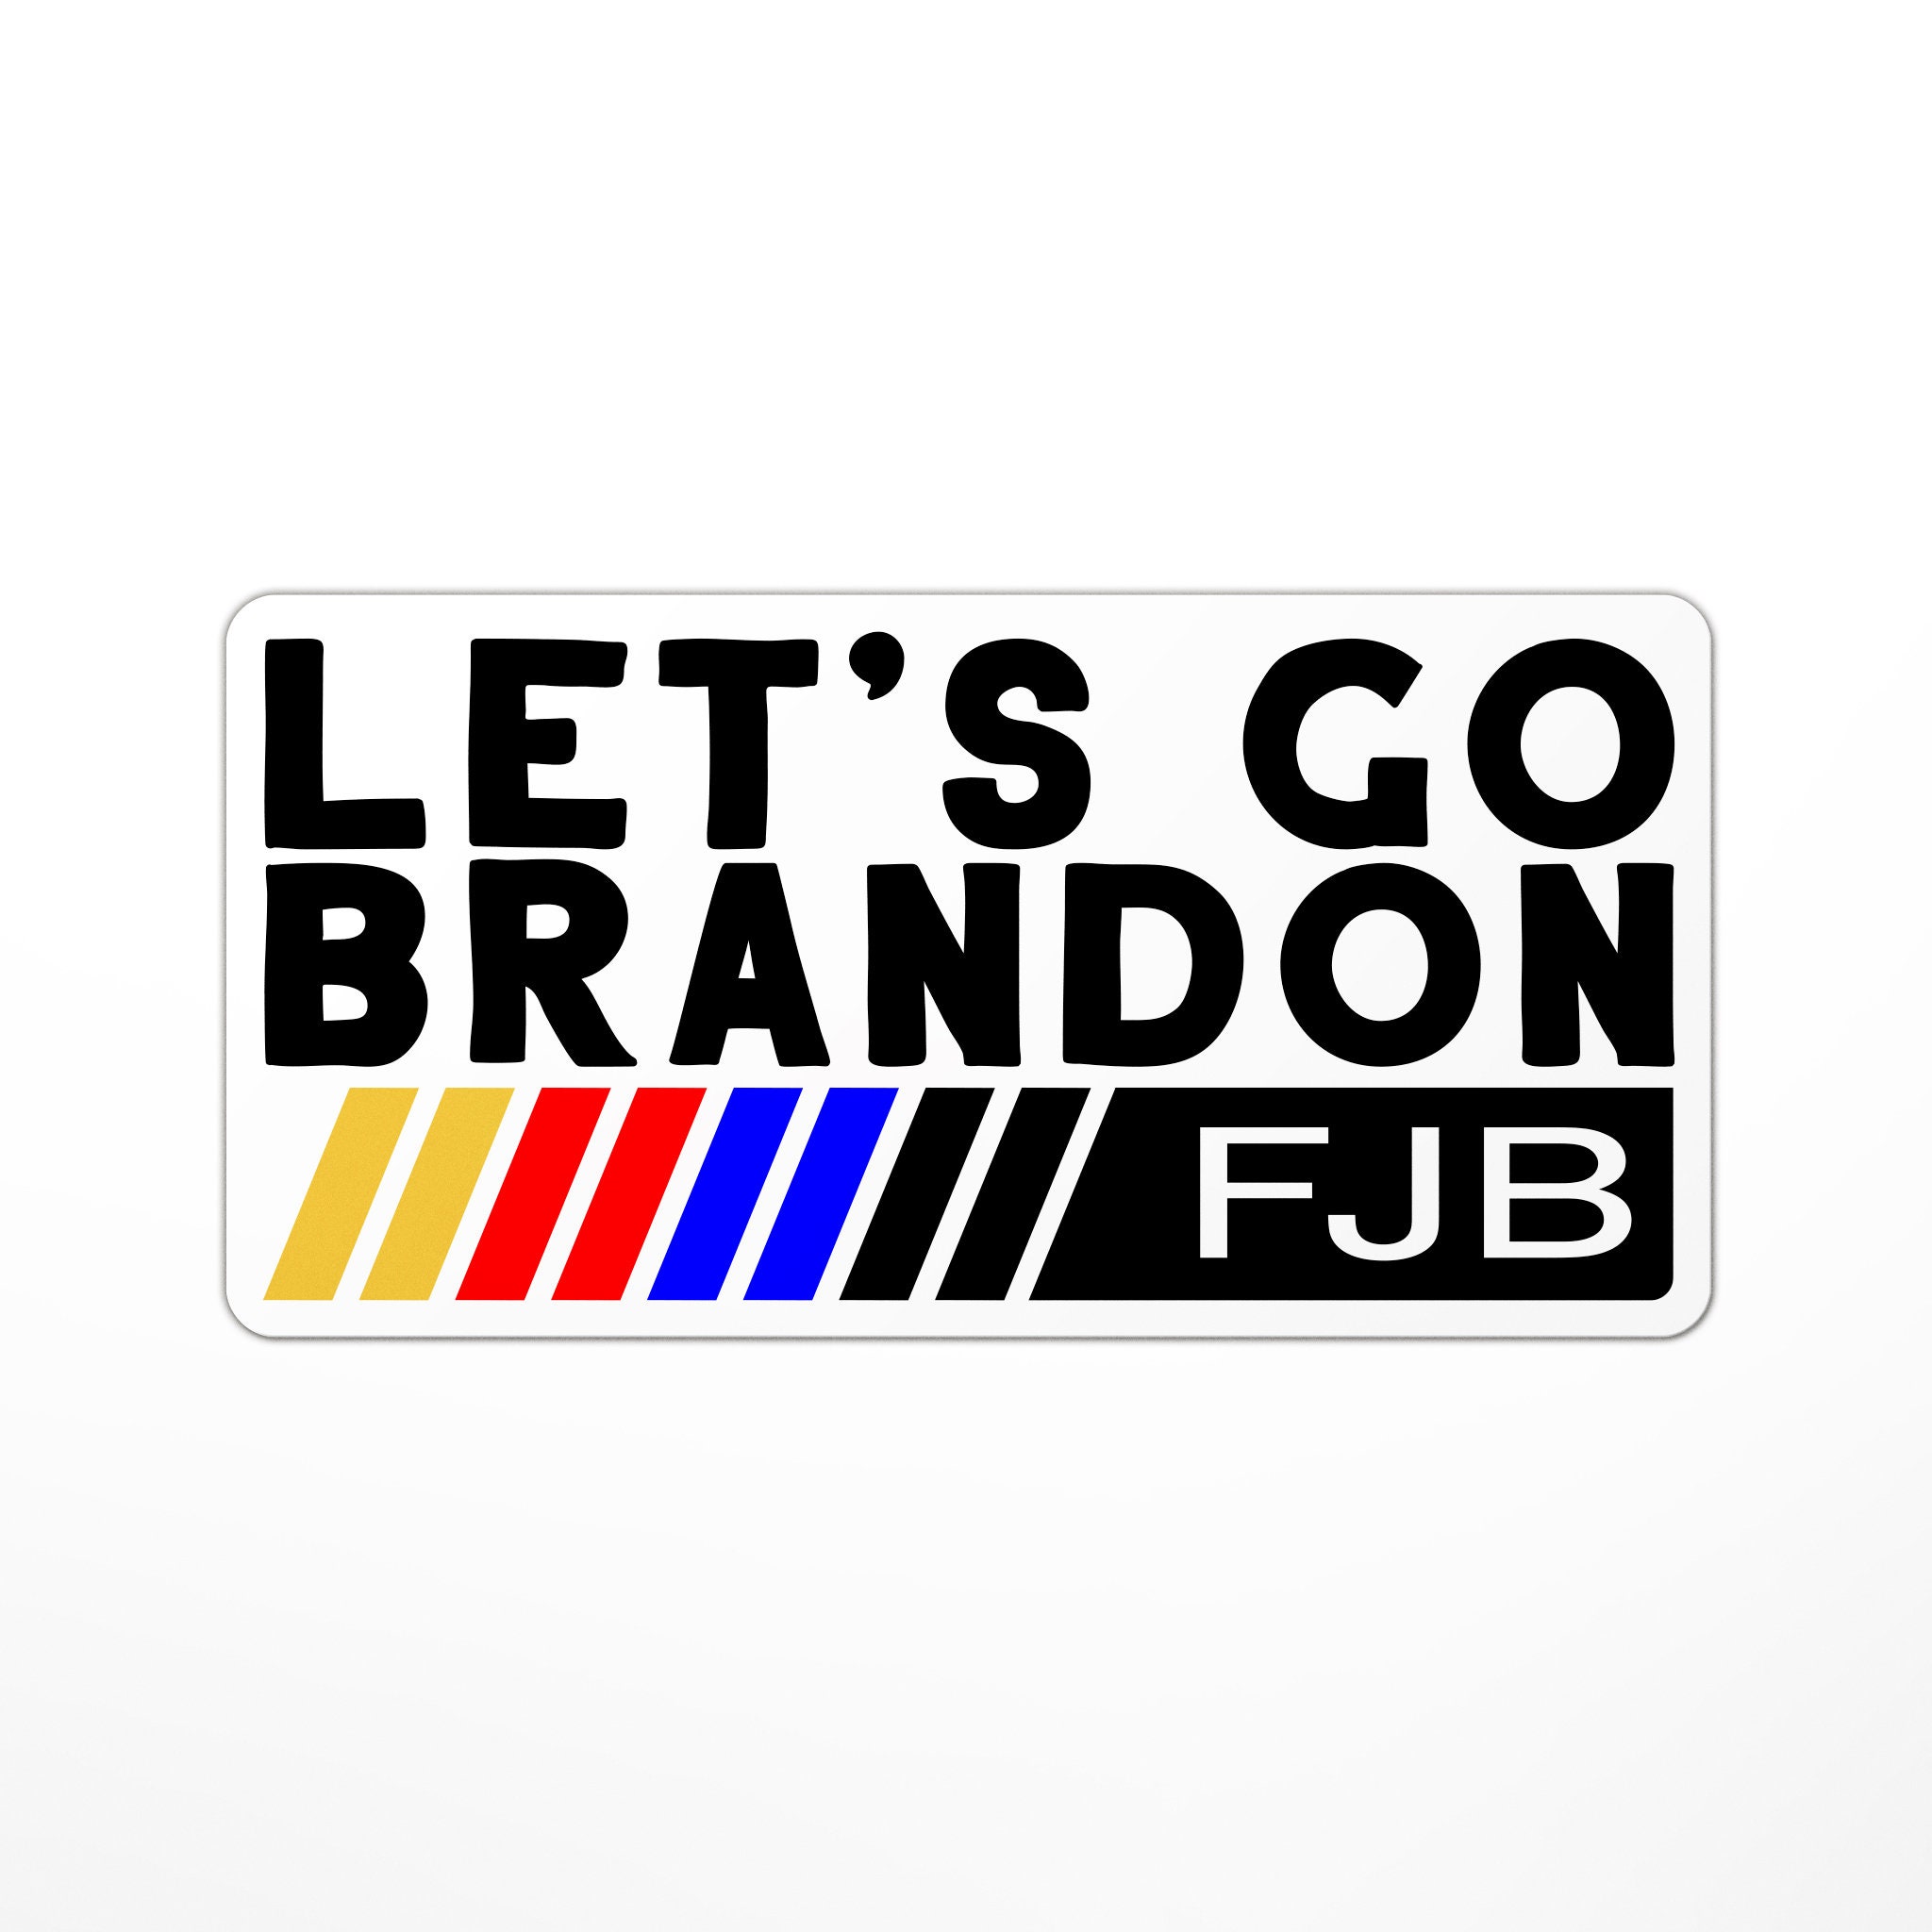 Lets Go Brandon Sticker FJB, Politics, Make America Great, Humor, Funny,  Comedy, Racing 